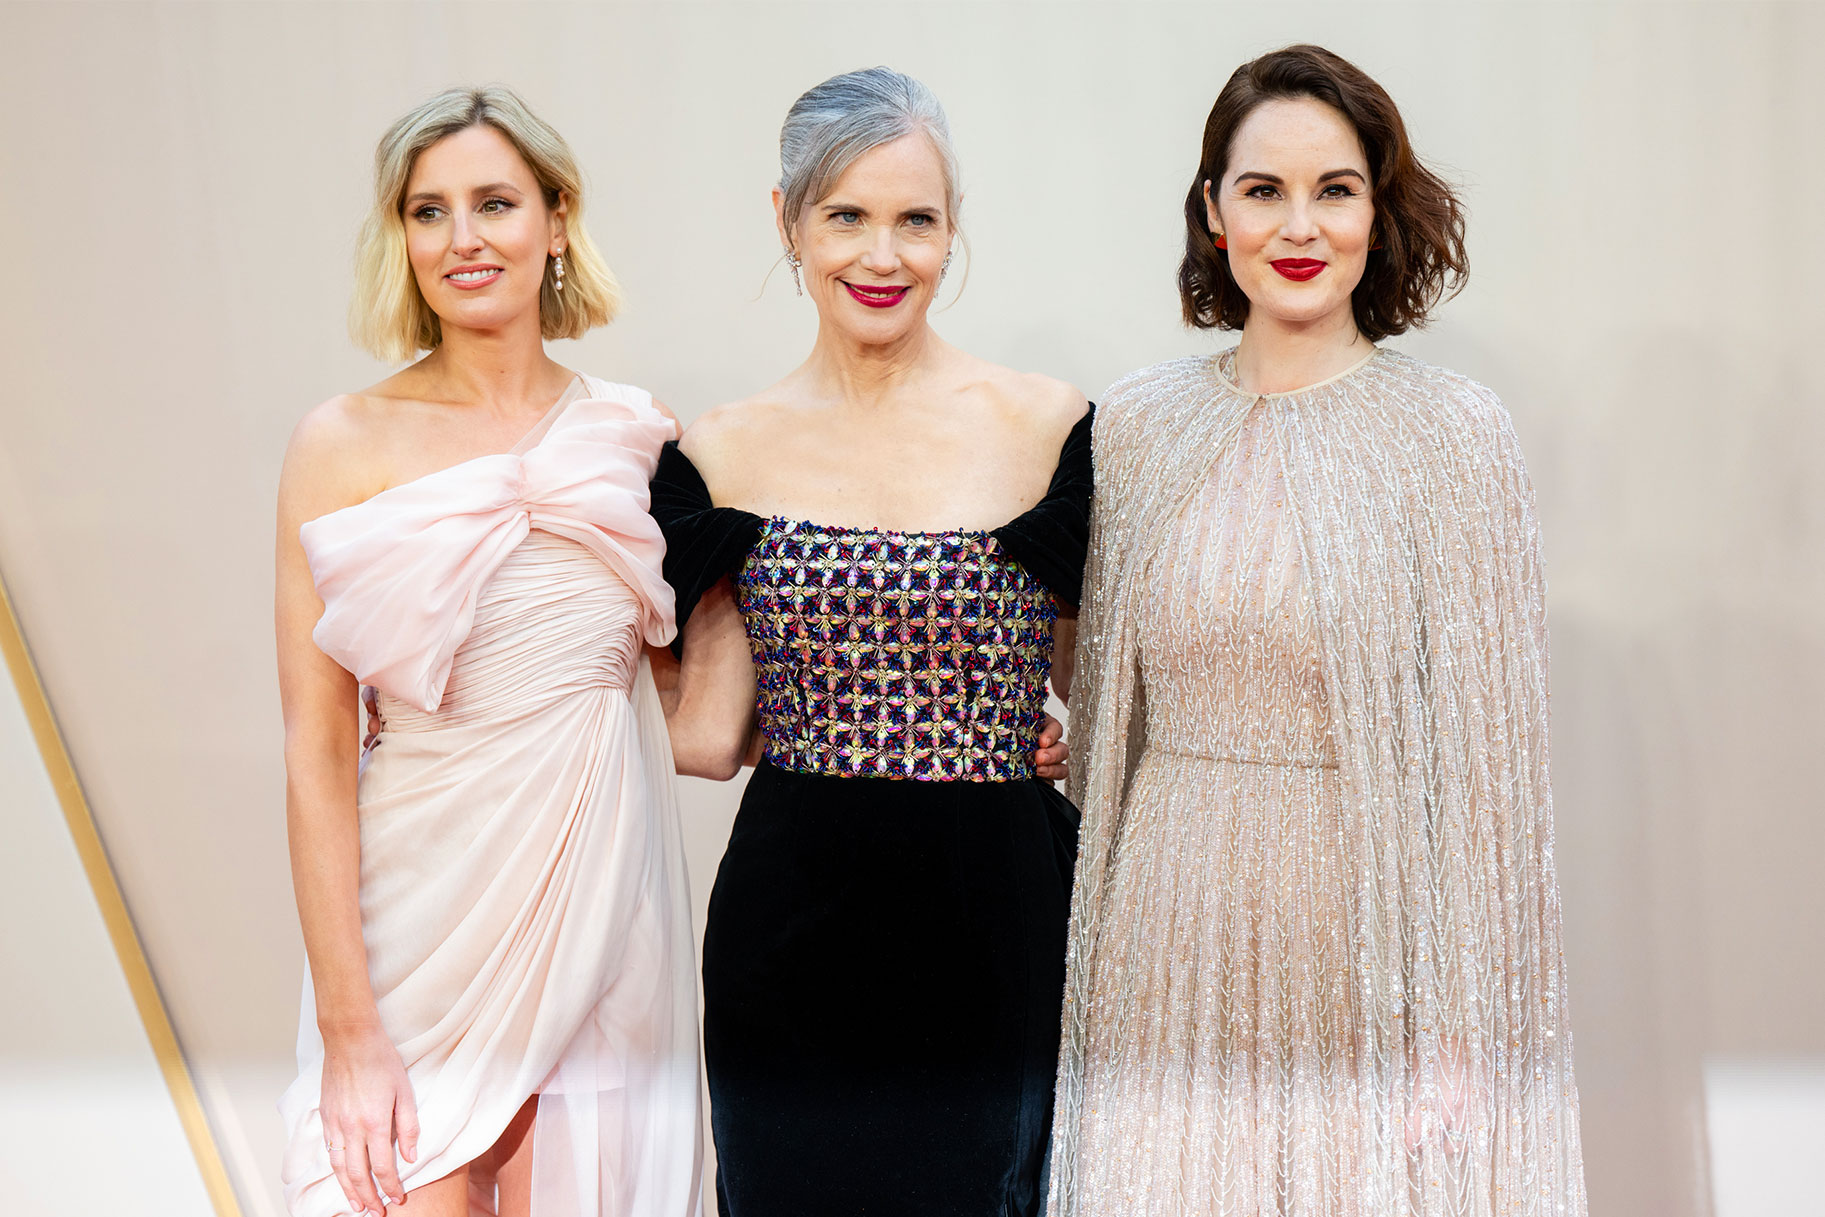 Laura Carmichael, Elizabeth McGovern, Michelle Dockery attends the World Premiere of "Downton Abbey: A New Era" at Cineworld Leicester Square